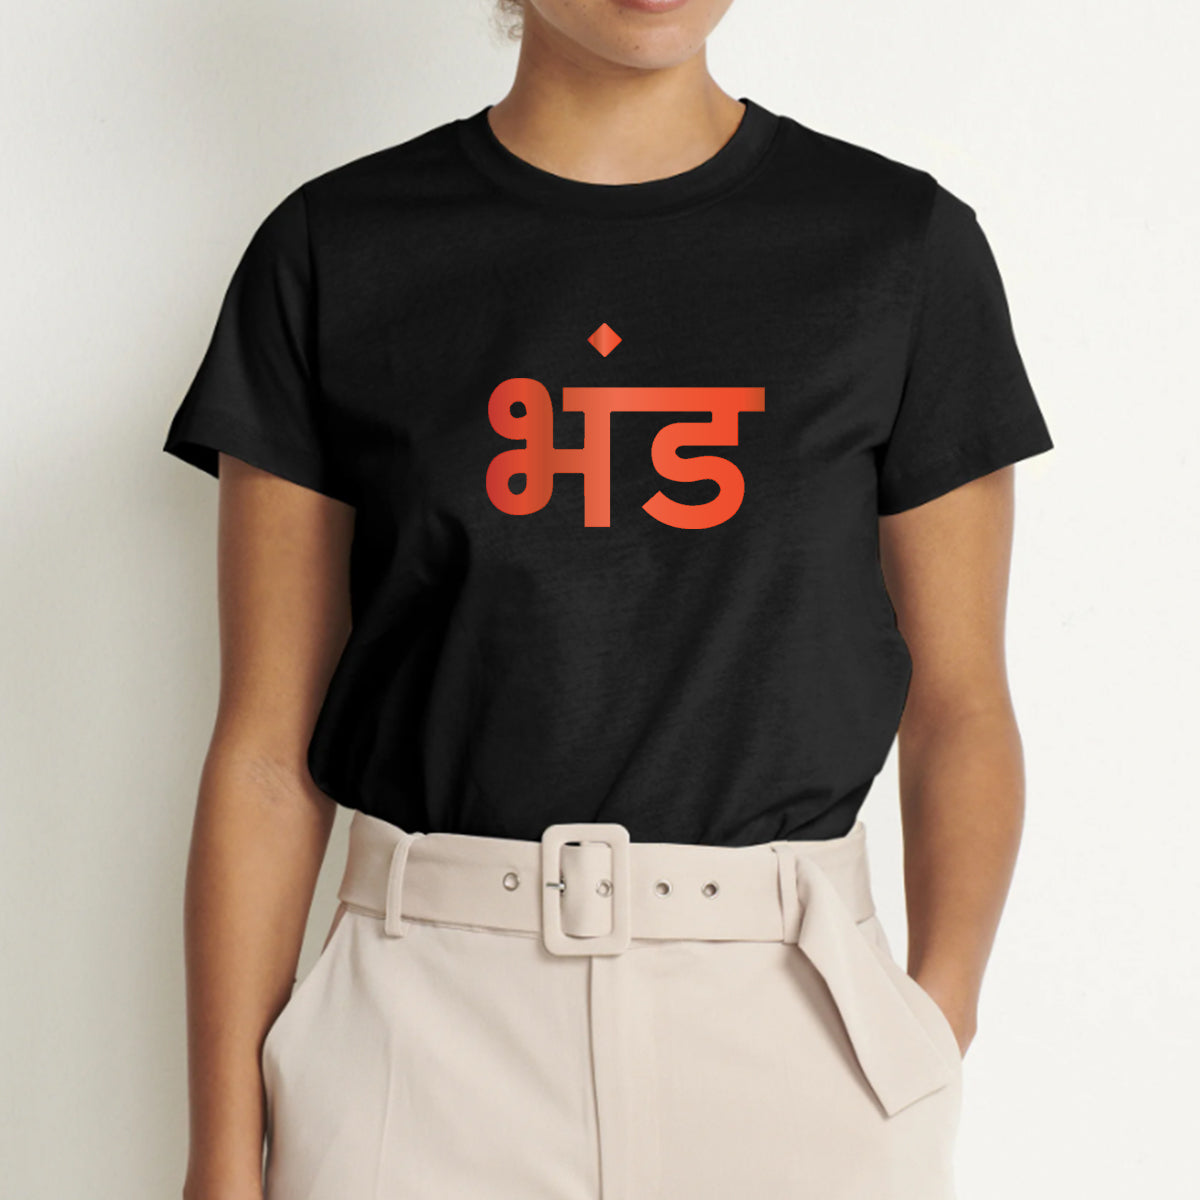 Bhand - Printed Cotton T- Shirt - Black